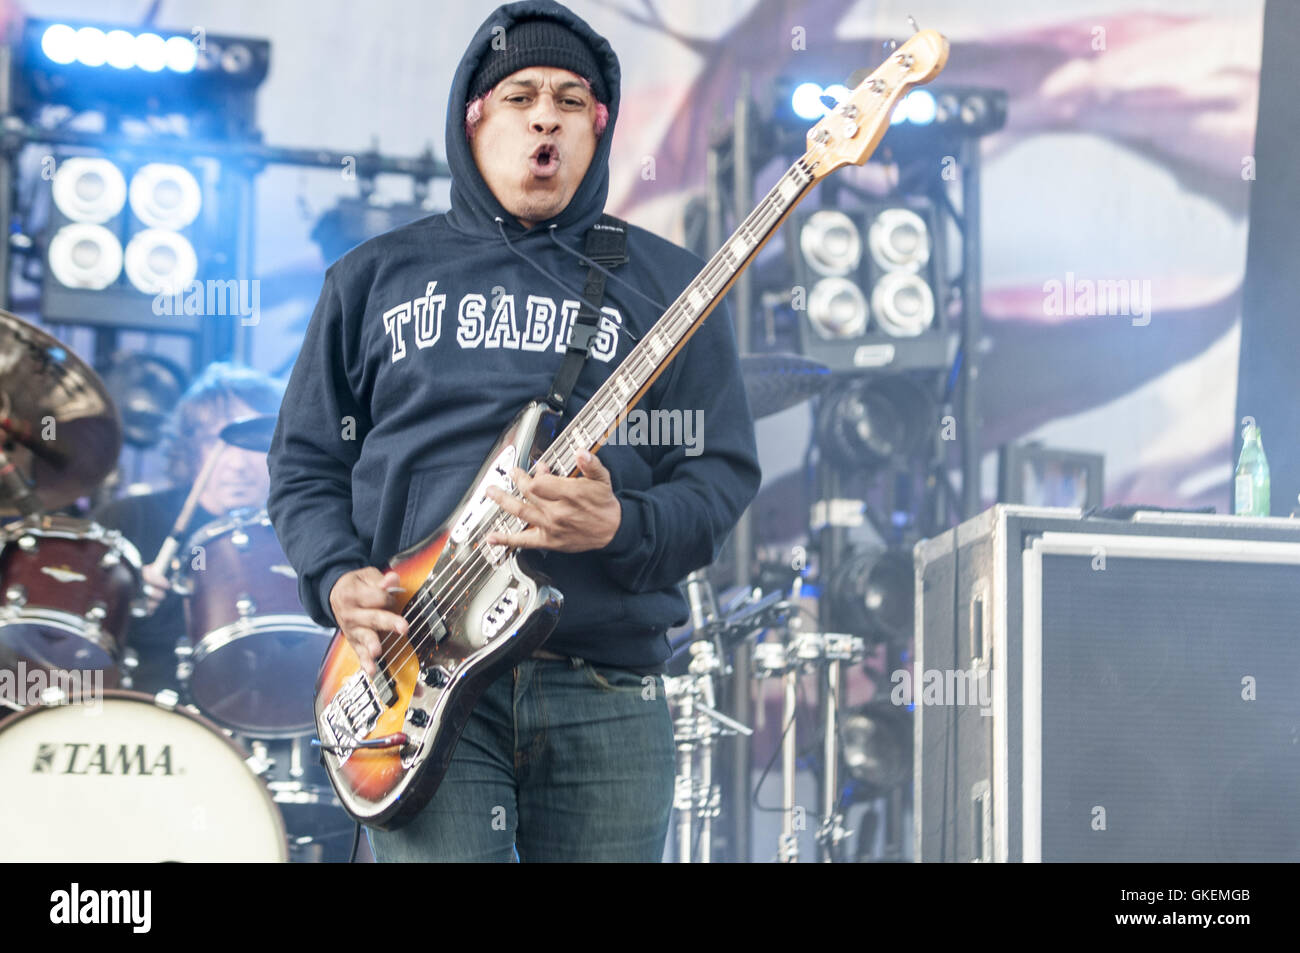 Rock auf der Reihe 2016 Musikfestival MAPFRE-Stadion in Columbus, Ohio, USA am 22. Mai 2016 mit: Deftones wo: Columbus, Ohio, Vereinigte Staaten, wann: 22. Mai 2016 Stockfoto